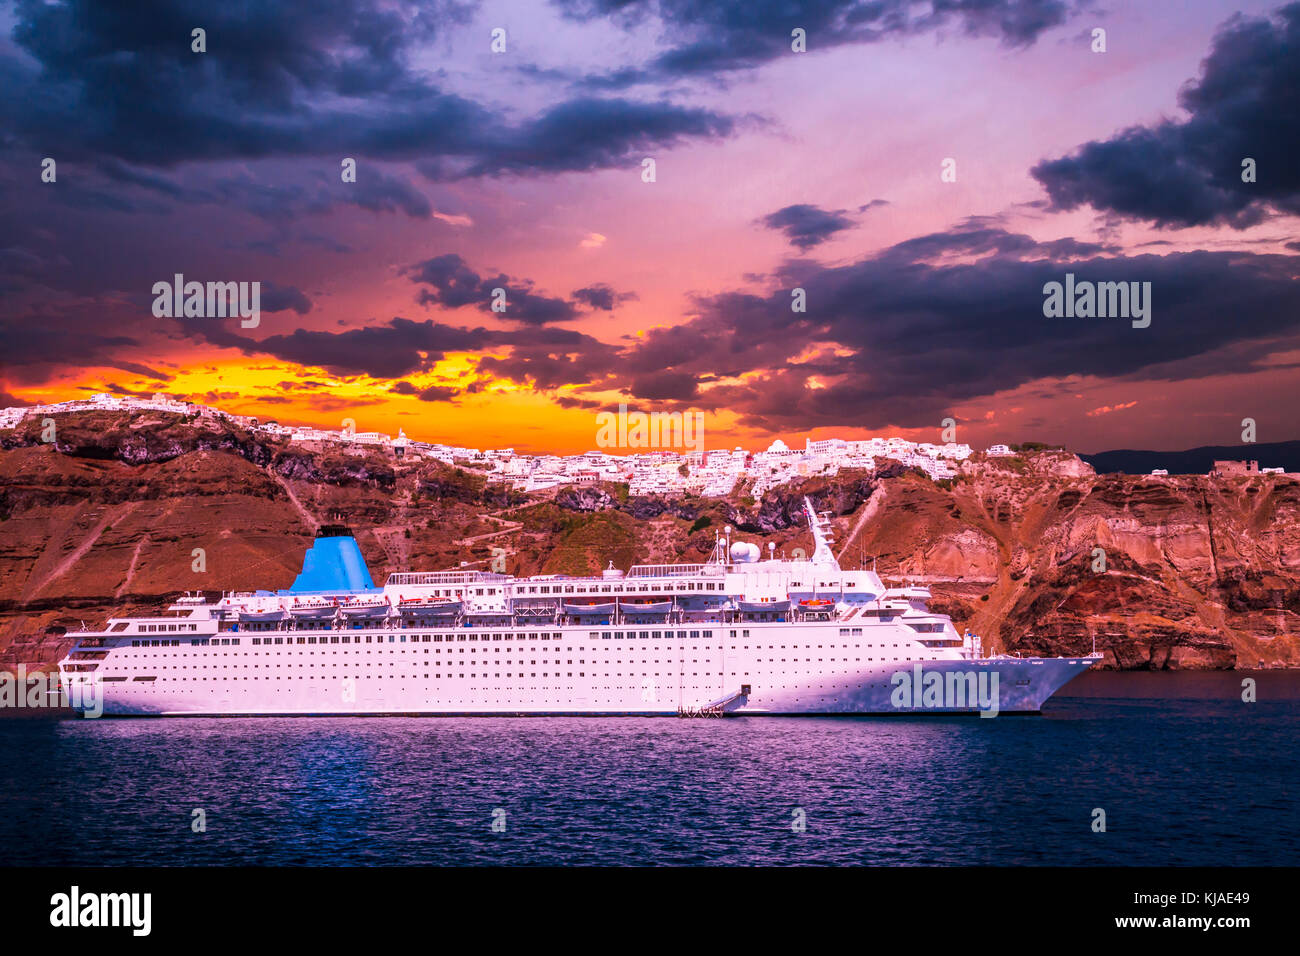 Santorini, Cyclades Islands, Greece. Luxury cruise ship in the bay of Santorini at sunset Stock Photo